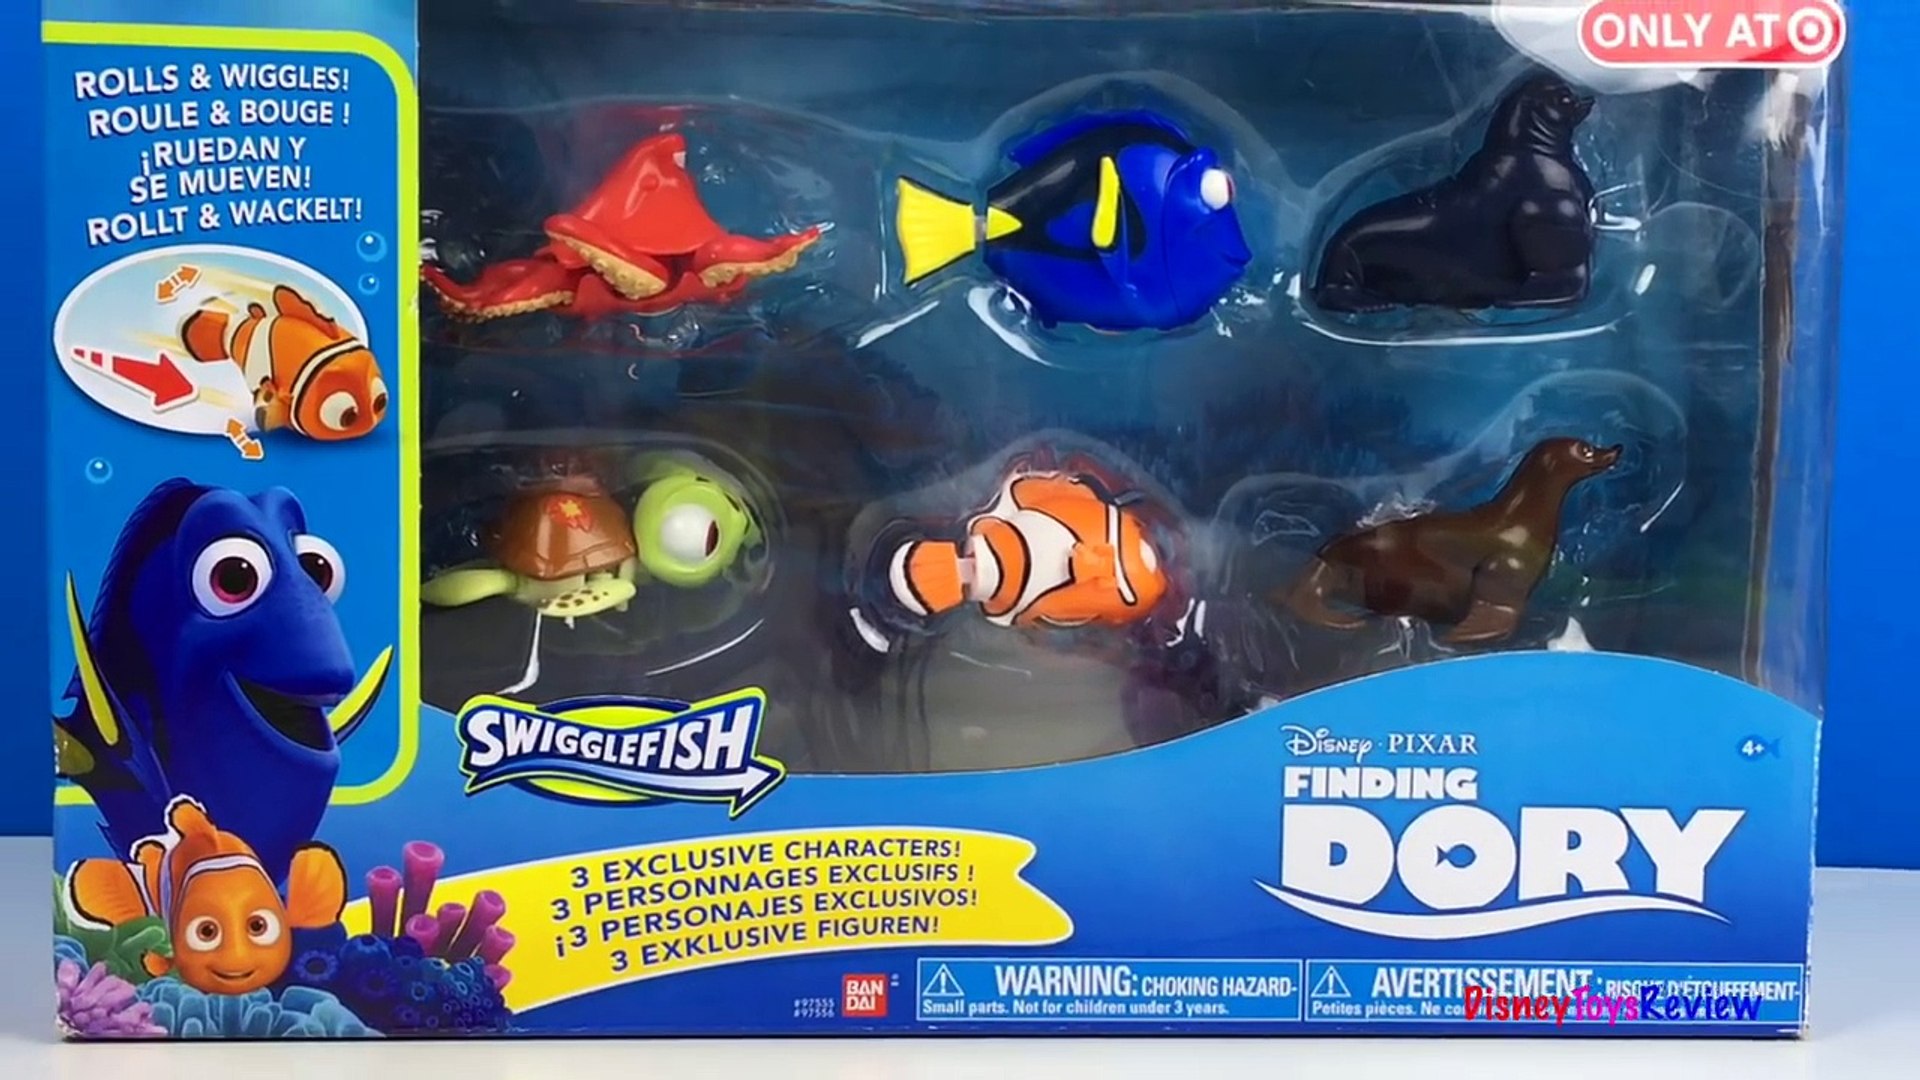 Finding Dory Little Baby Dory Swigglefish Bandai Disney Pixar Toy Wave 3 #36409